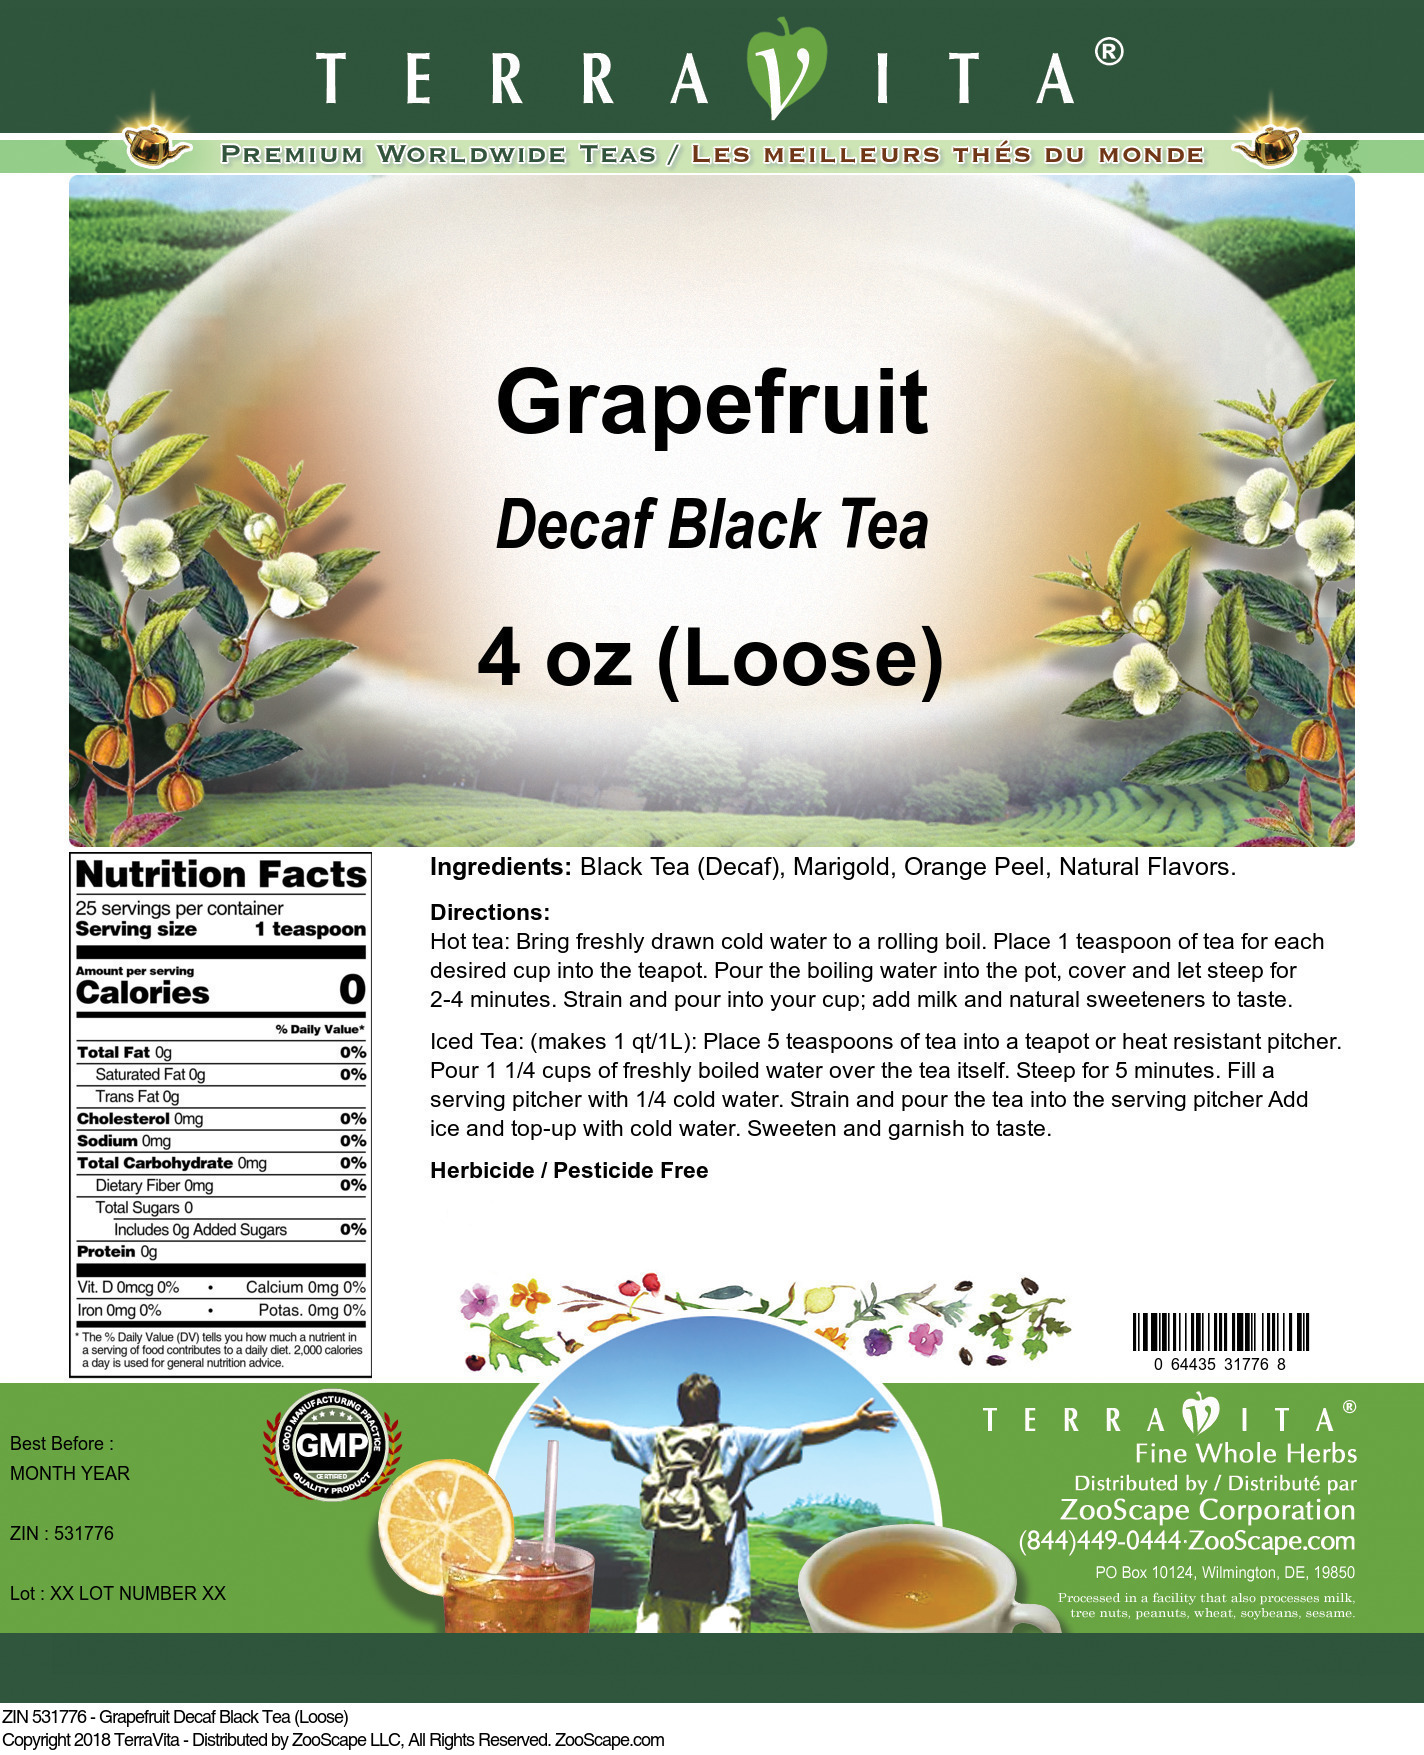 Grapefruit Decaf Black Tea (Loose) - Label